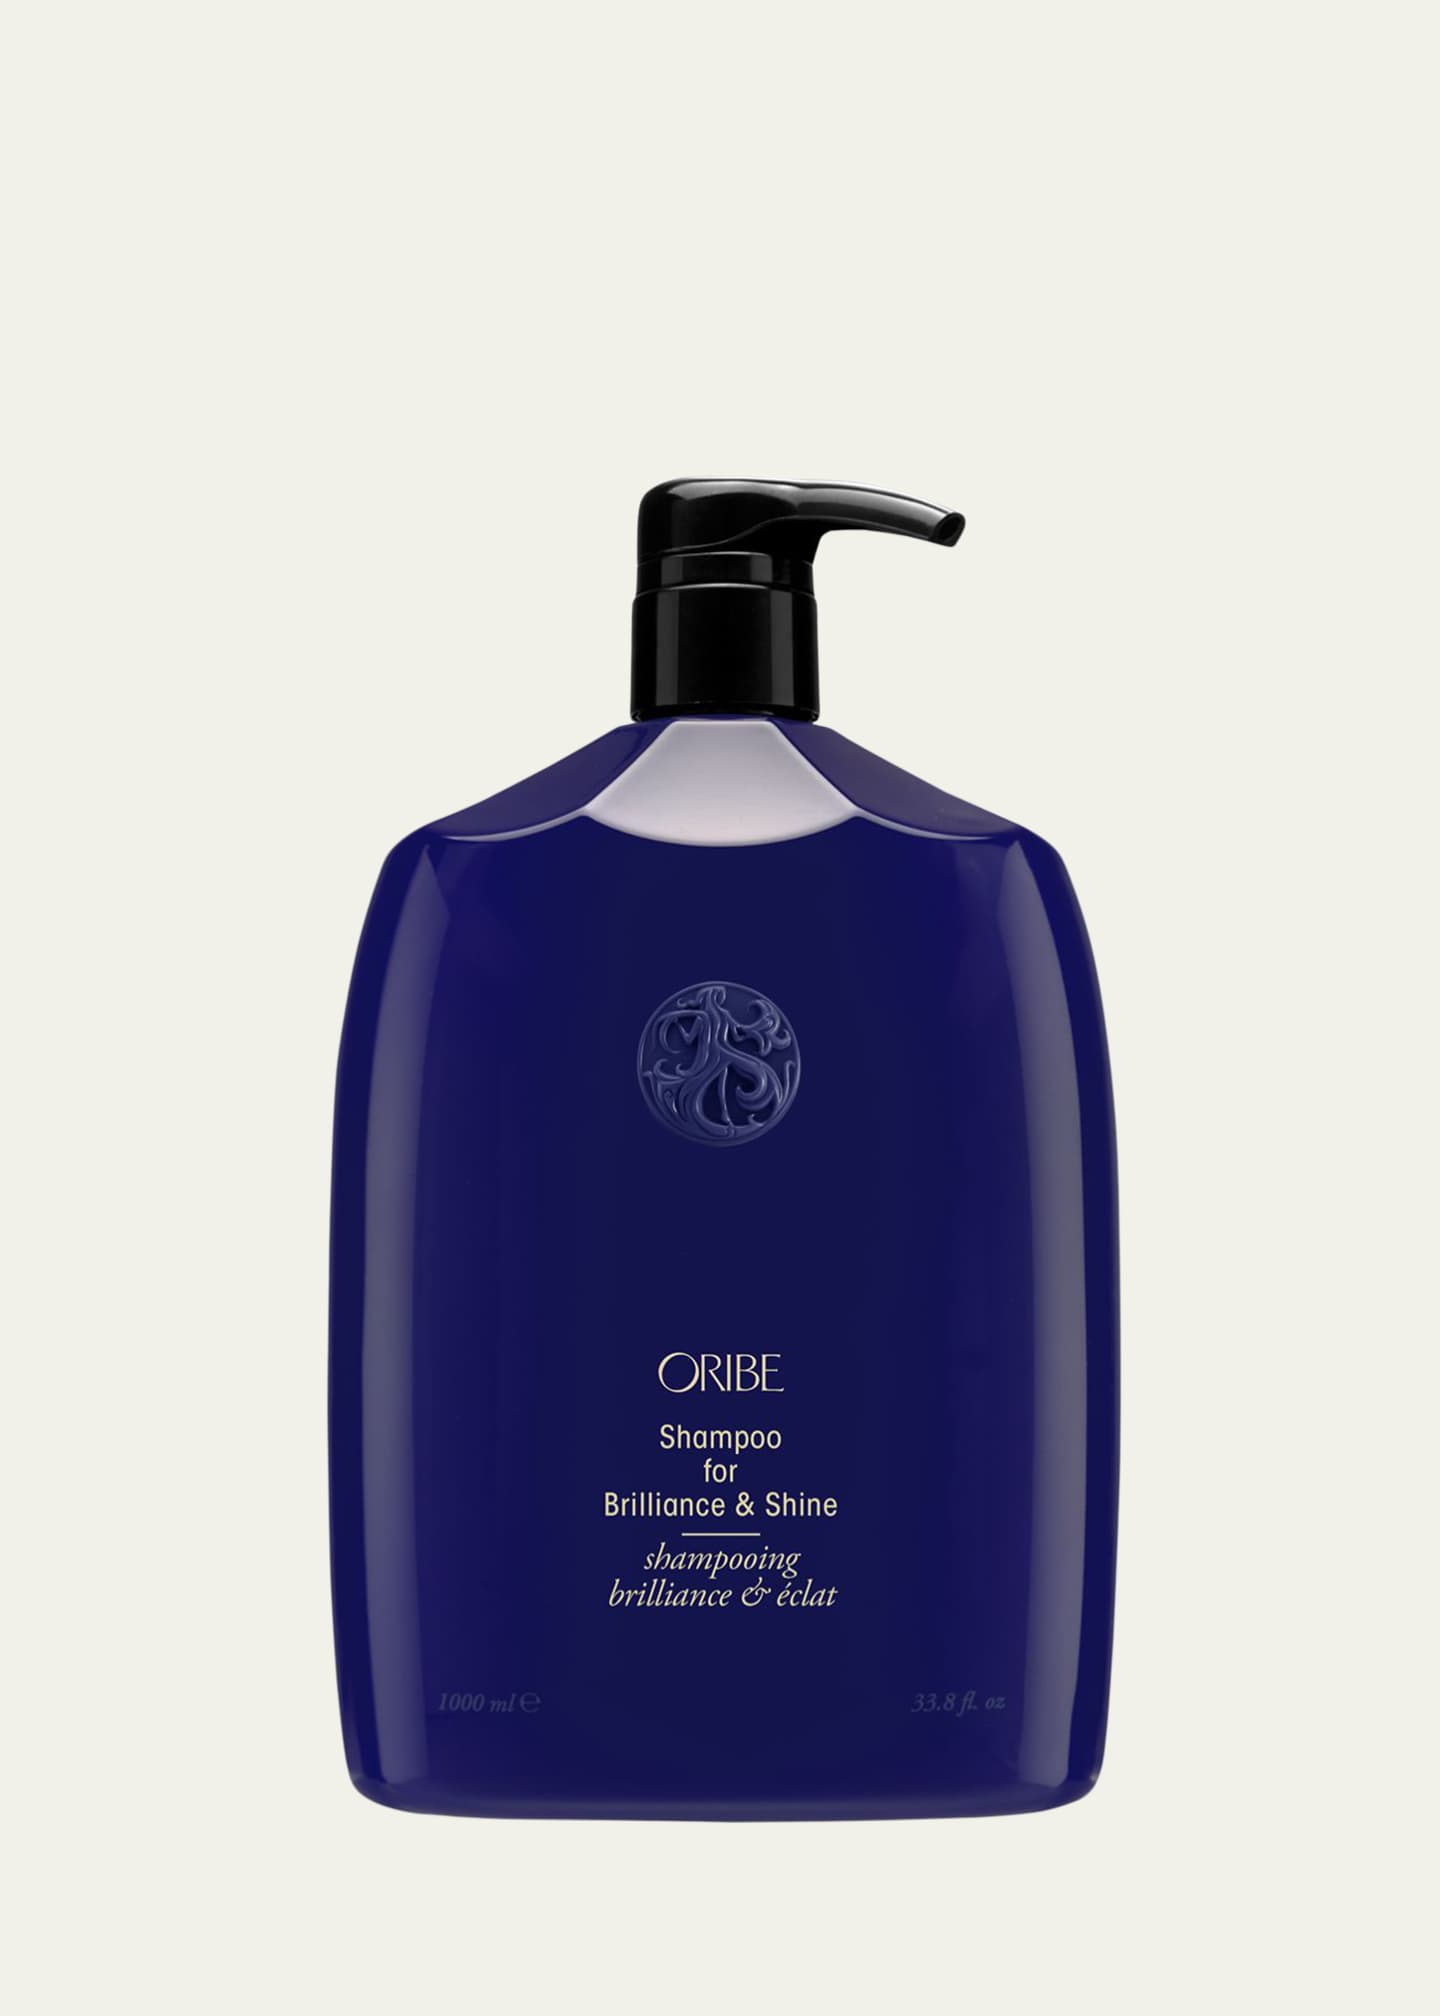 Oribe 33 oz. Shampoo for Brilliance & Shine Image 1 of 2